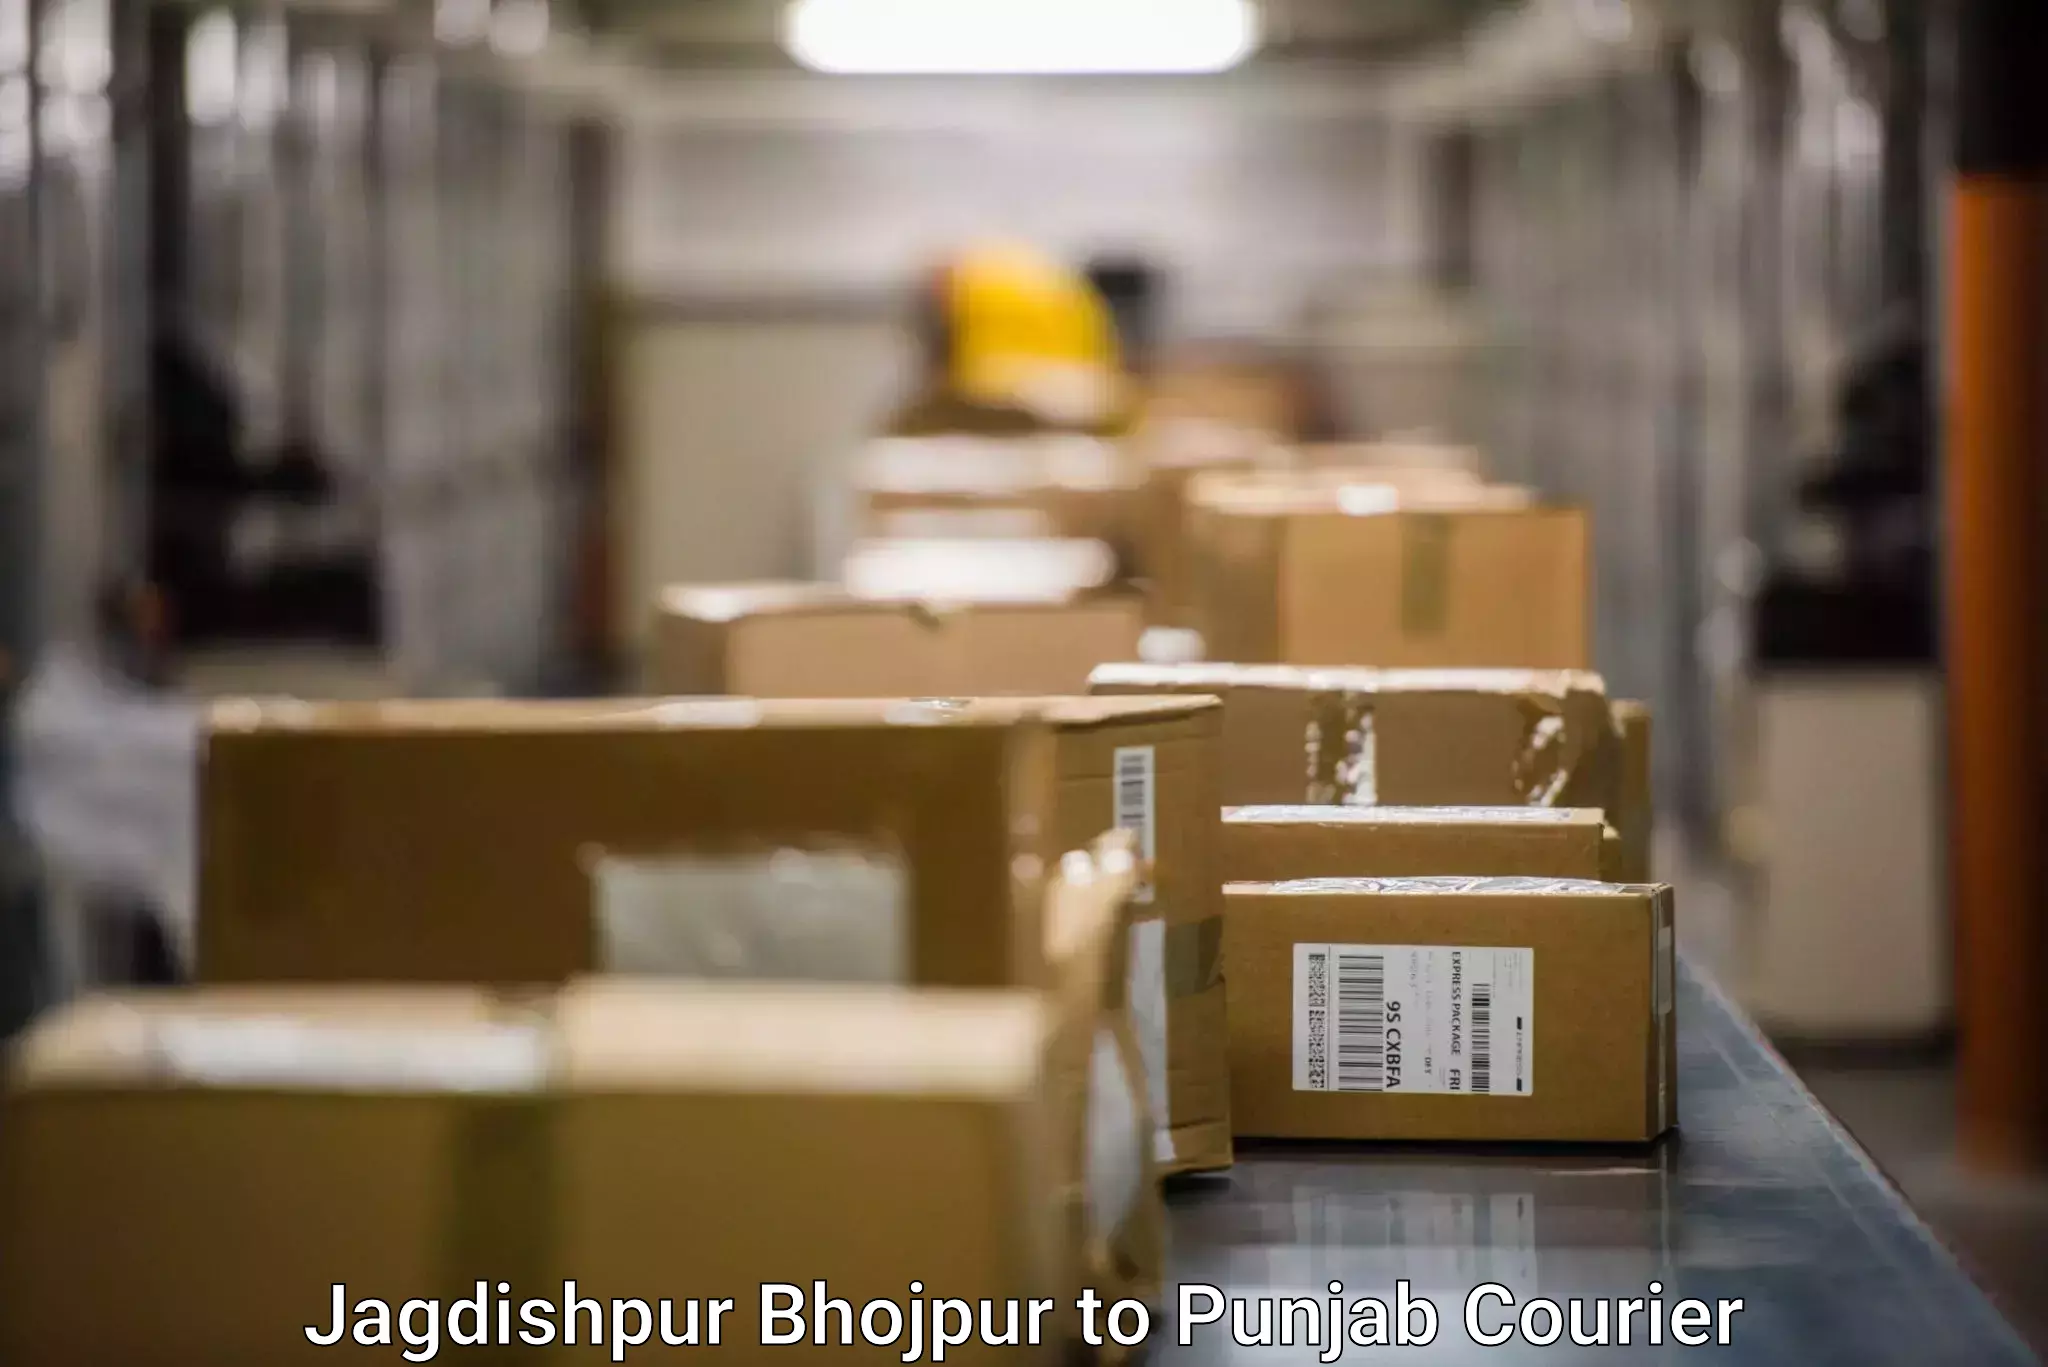 Doorstep delivery service Jagdishpur Bhojpur to Rupnagar